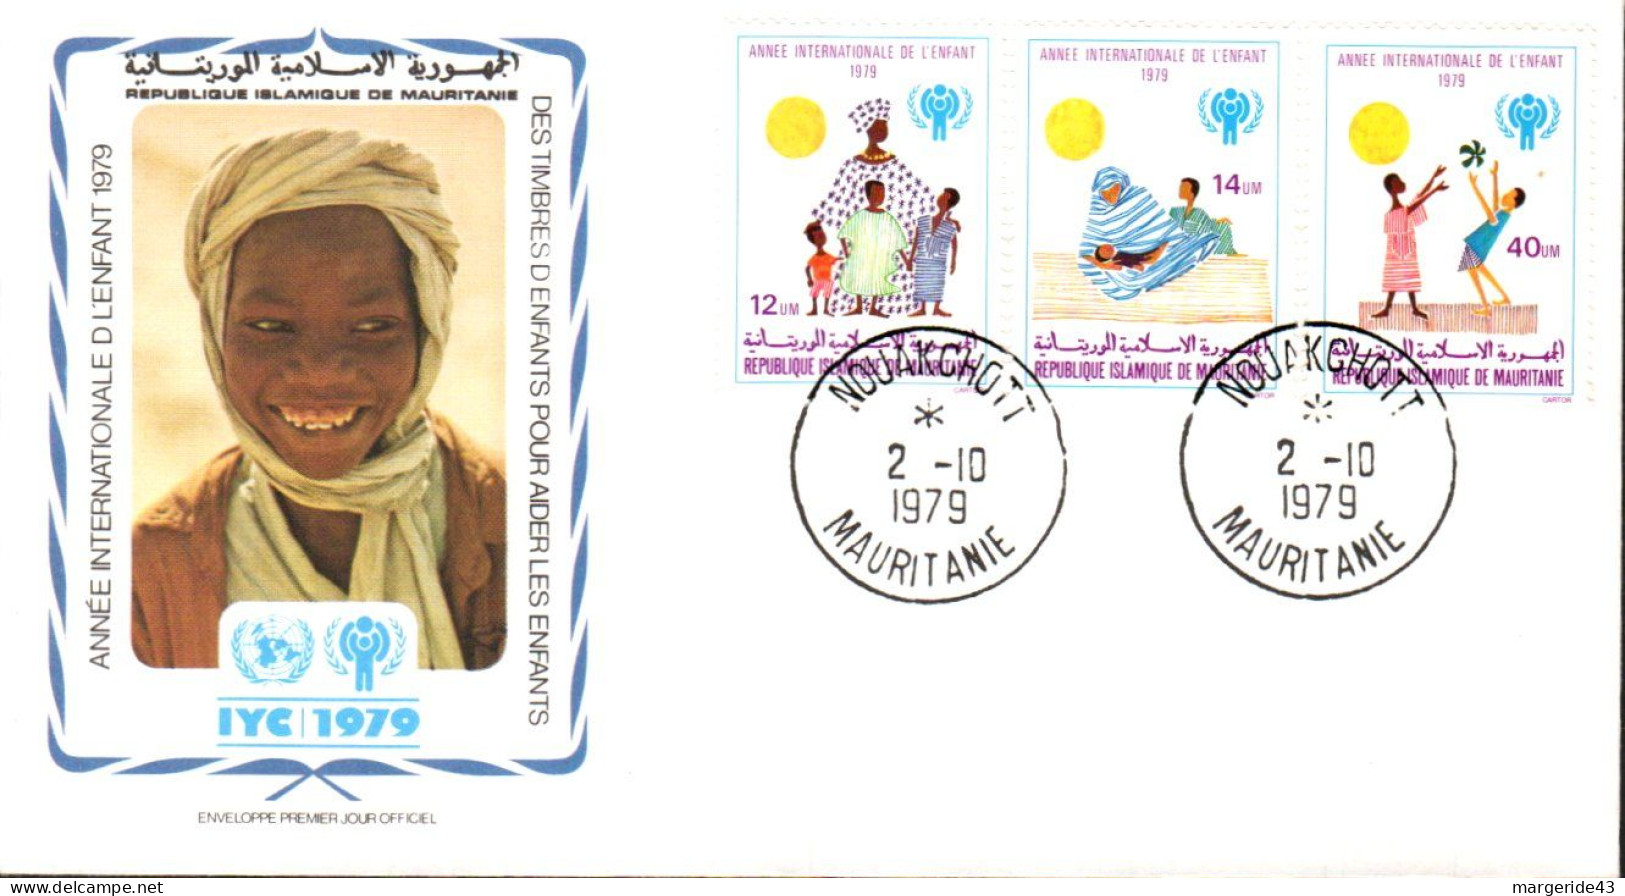 MAURITANIE FDC 1979 ANNEE DE L'ENFANT UNICEF - Mauritanie (1960-...)